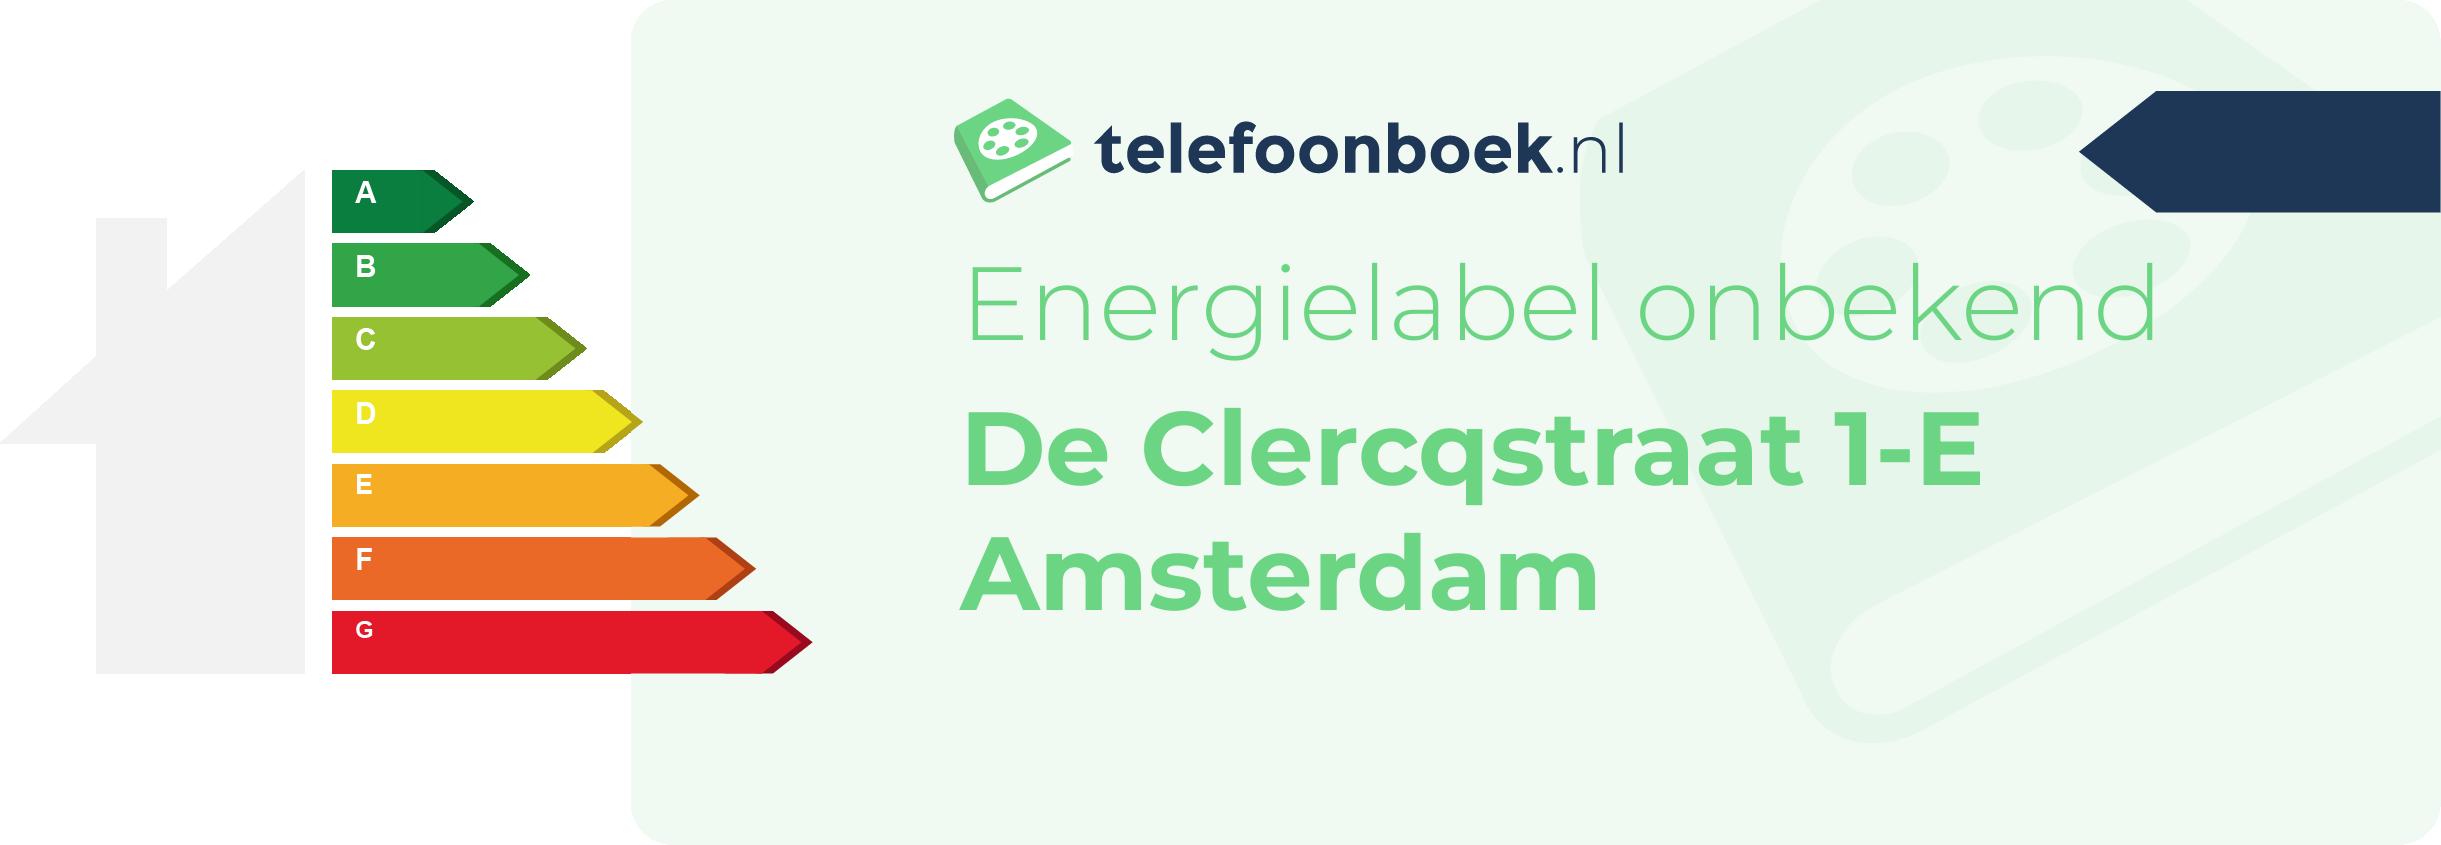 Energielabel De Clercqstraat 1-E Amsterdam